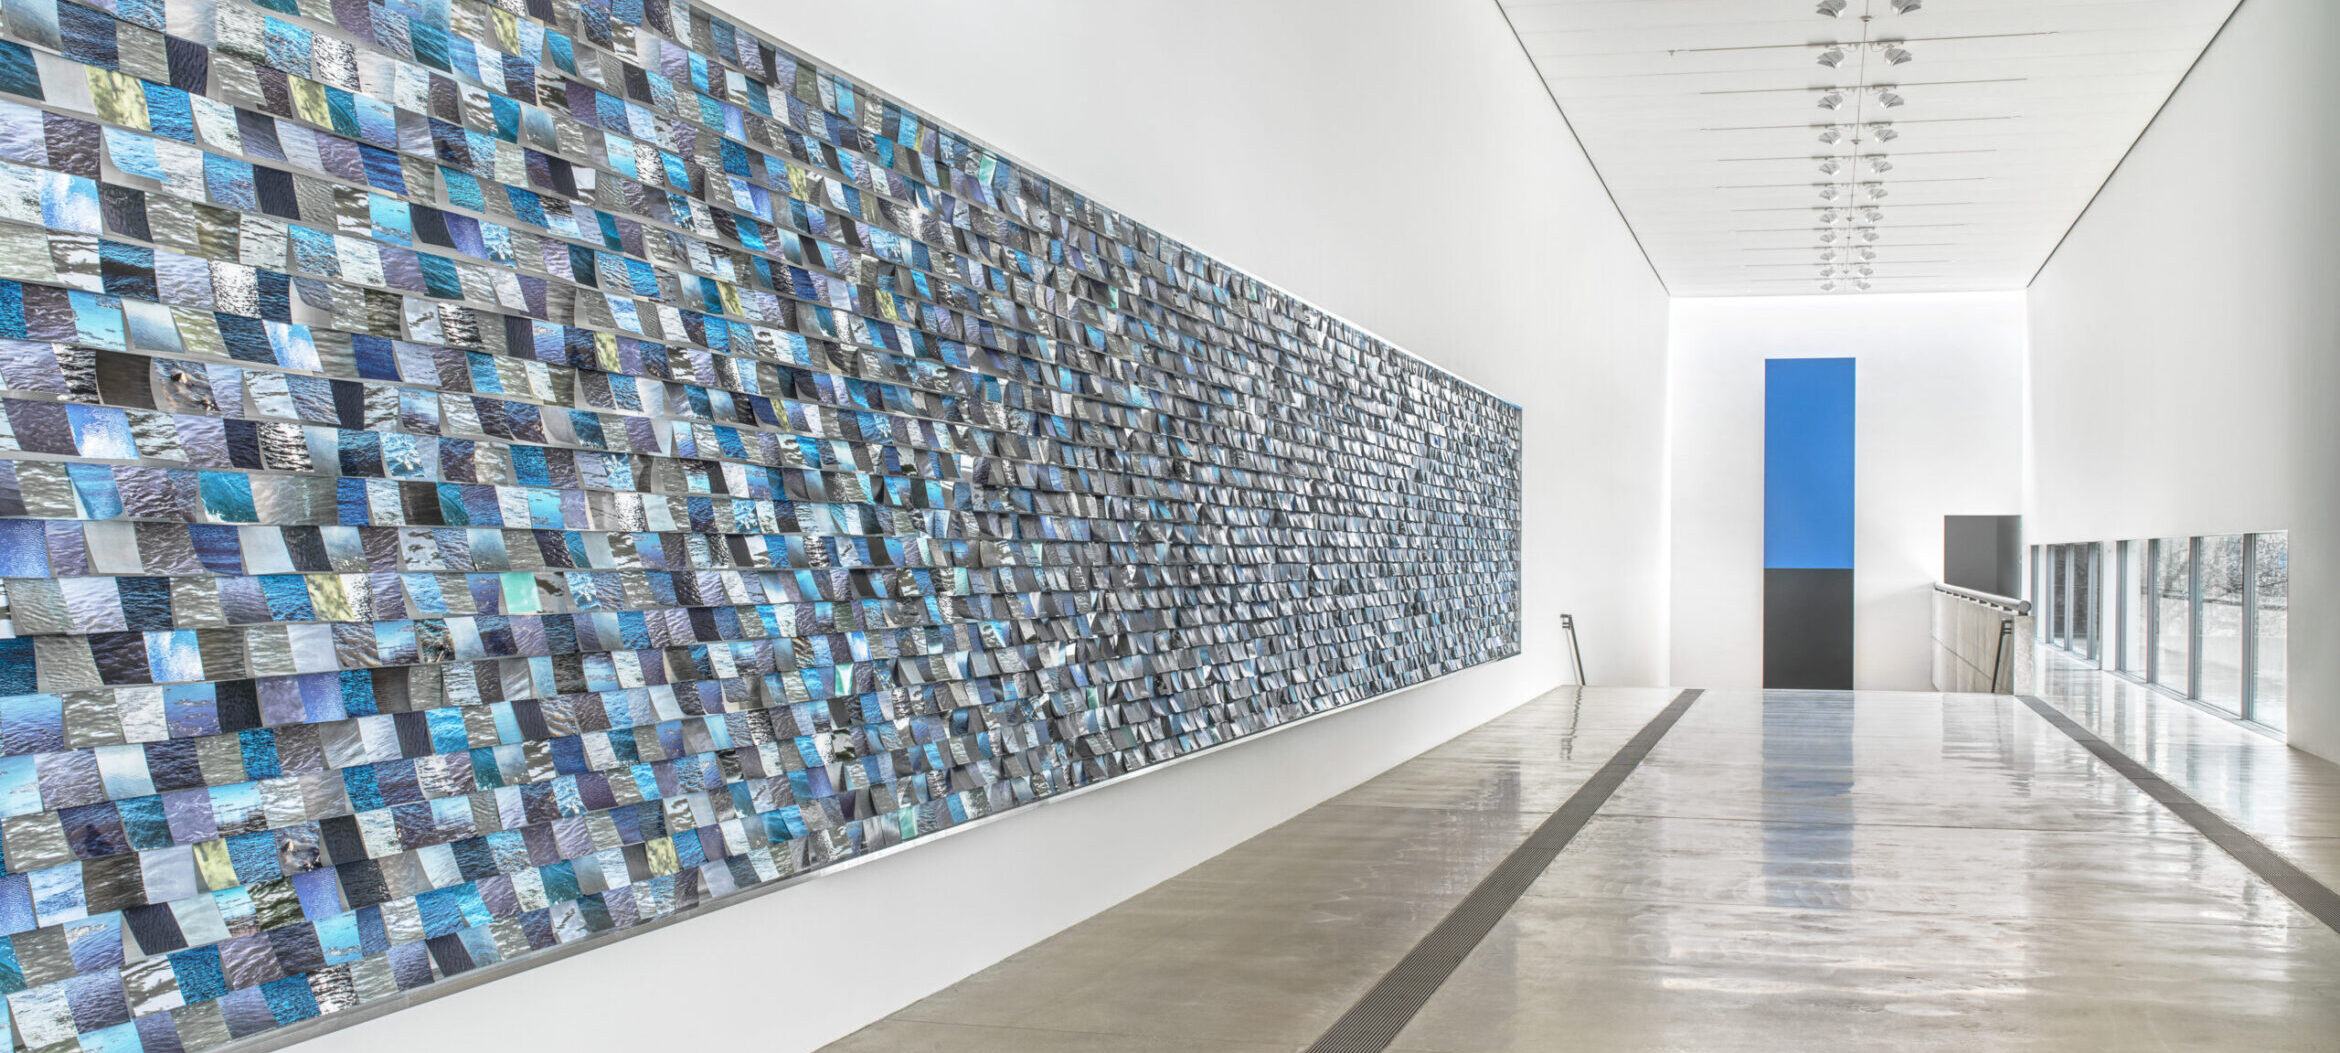 Large horizontal installation with 3,500 rectangular photographs of various rivers.